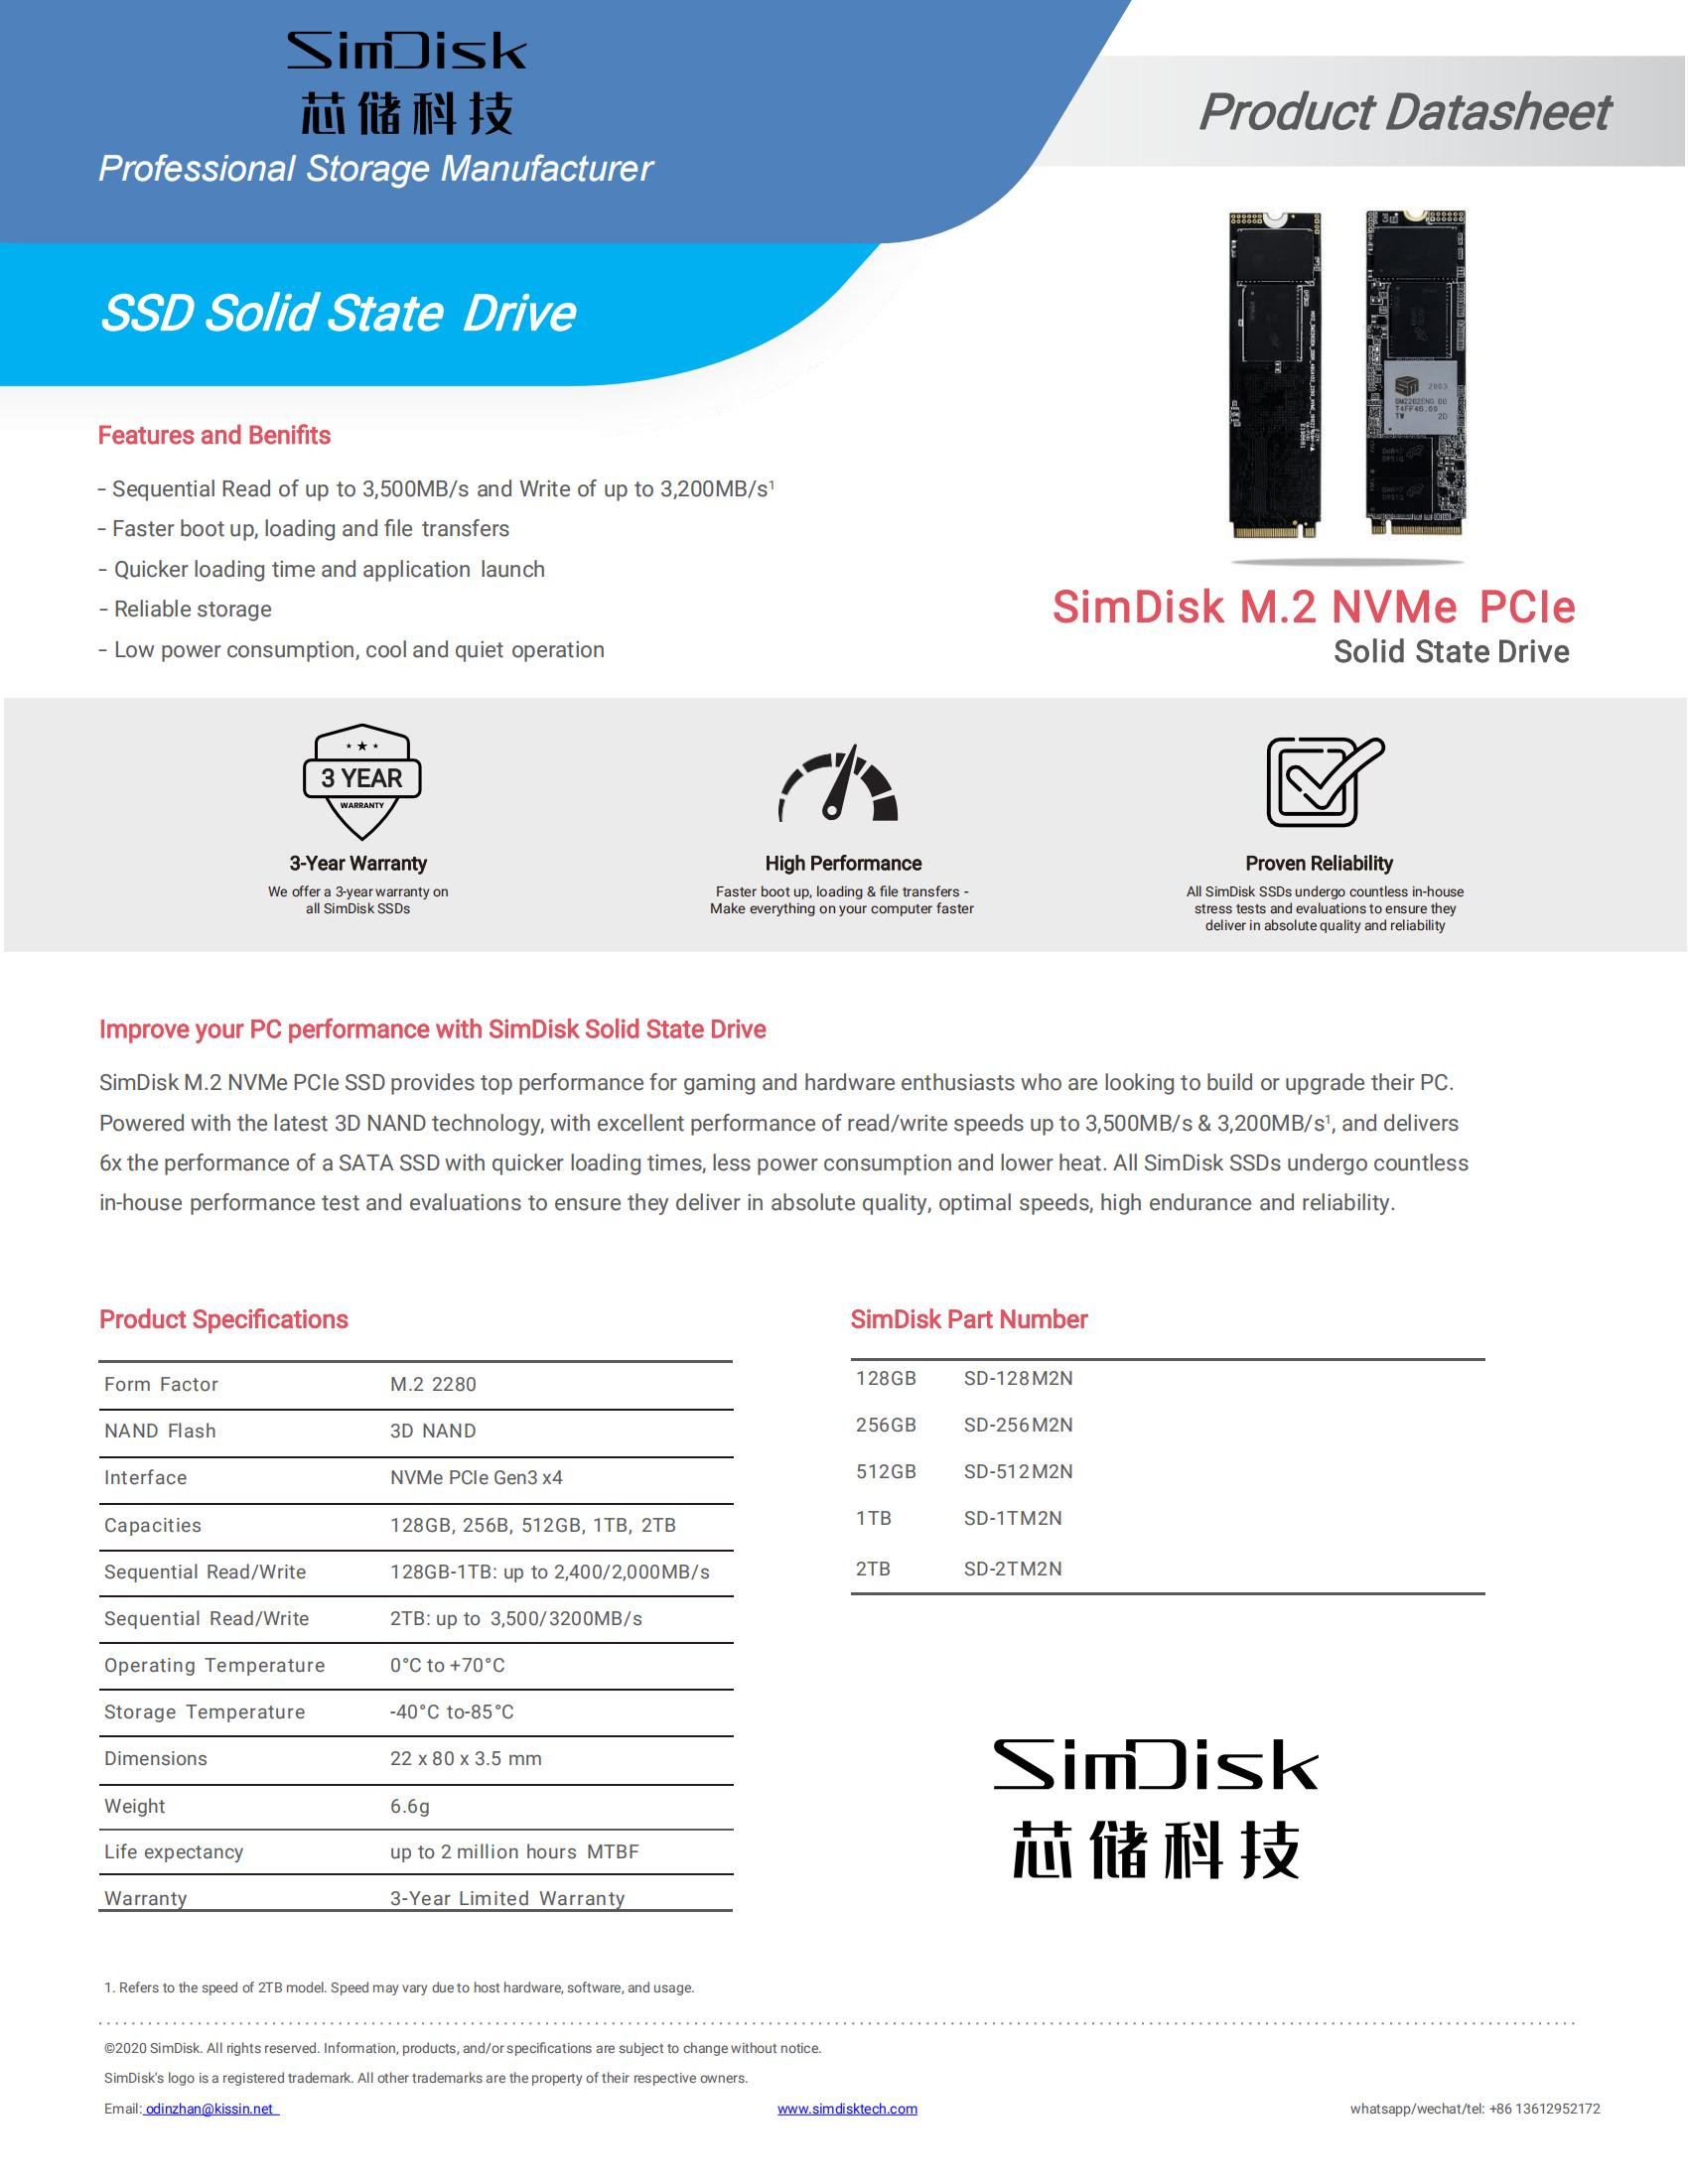 SimDisk M.2 NVME SSD Fitxa_00